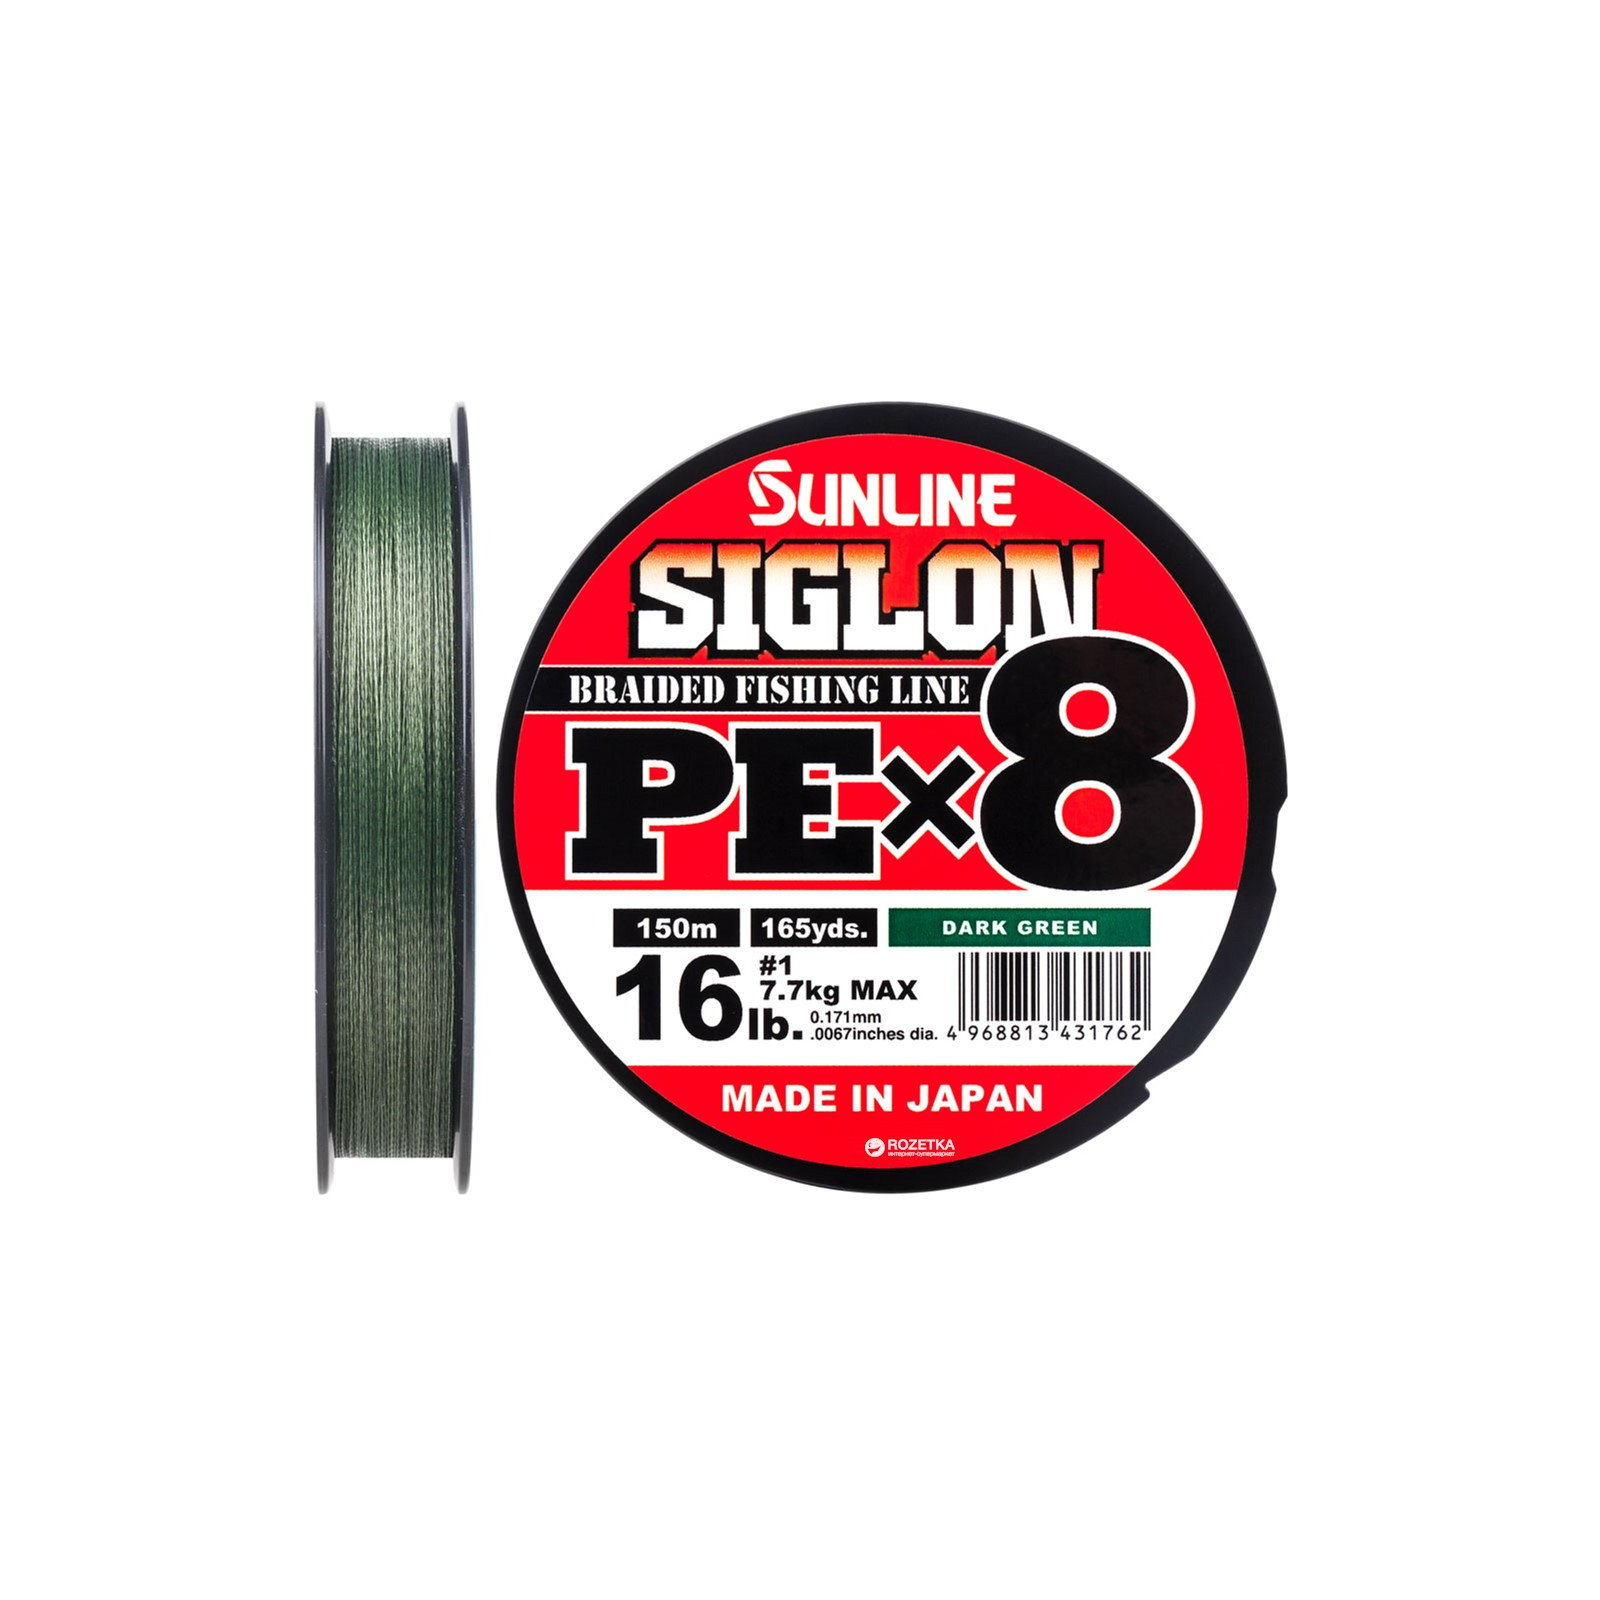 Шнур Sunline Siglon PE х8 150m 1.0/0.171mm 16lb/7.7kg Dark Green (1658.09.77)